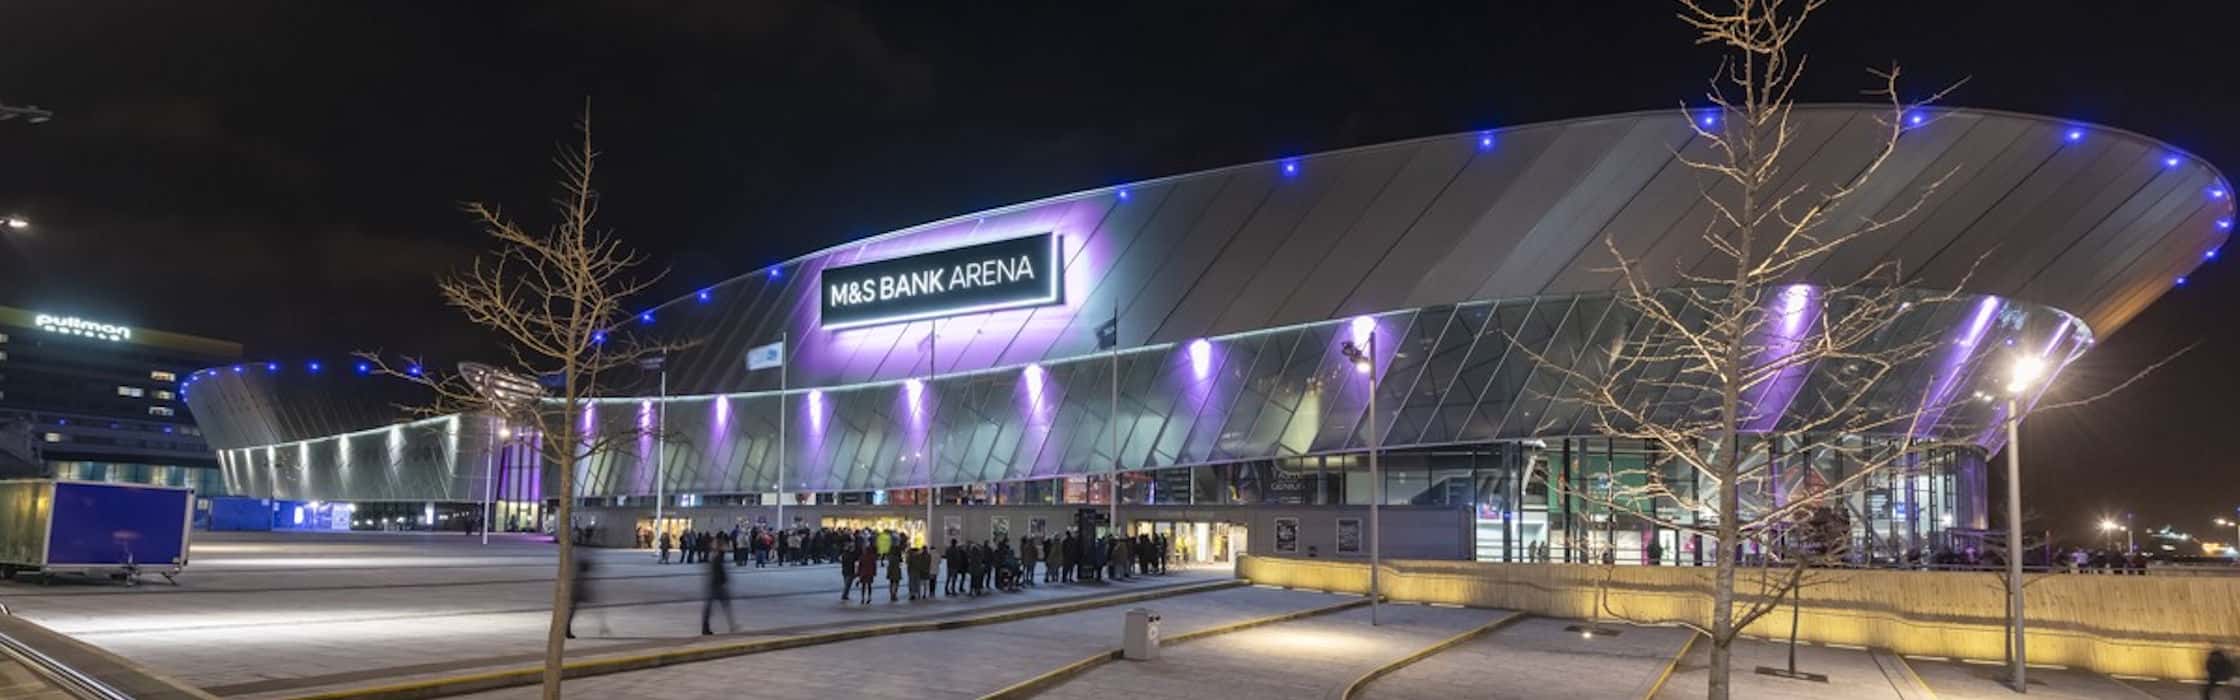 M&S Bank Arena.jpg (117 KB)